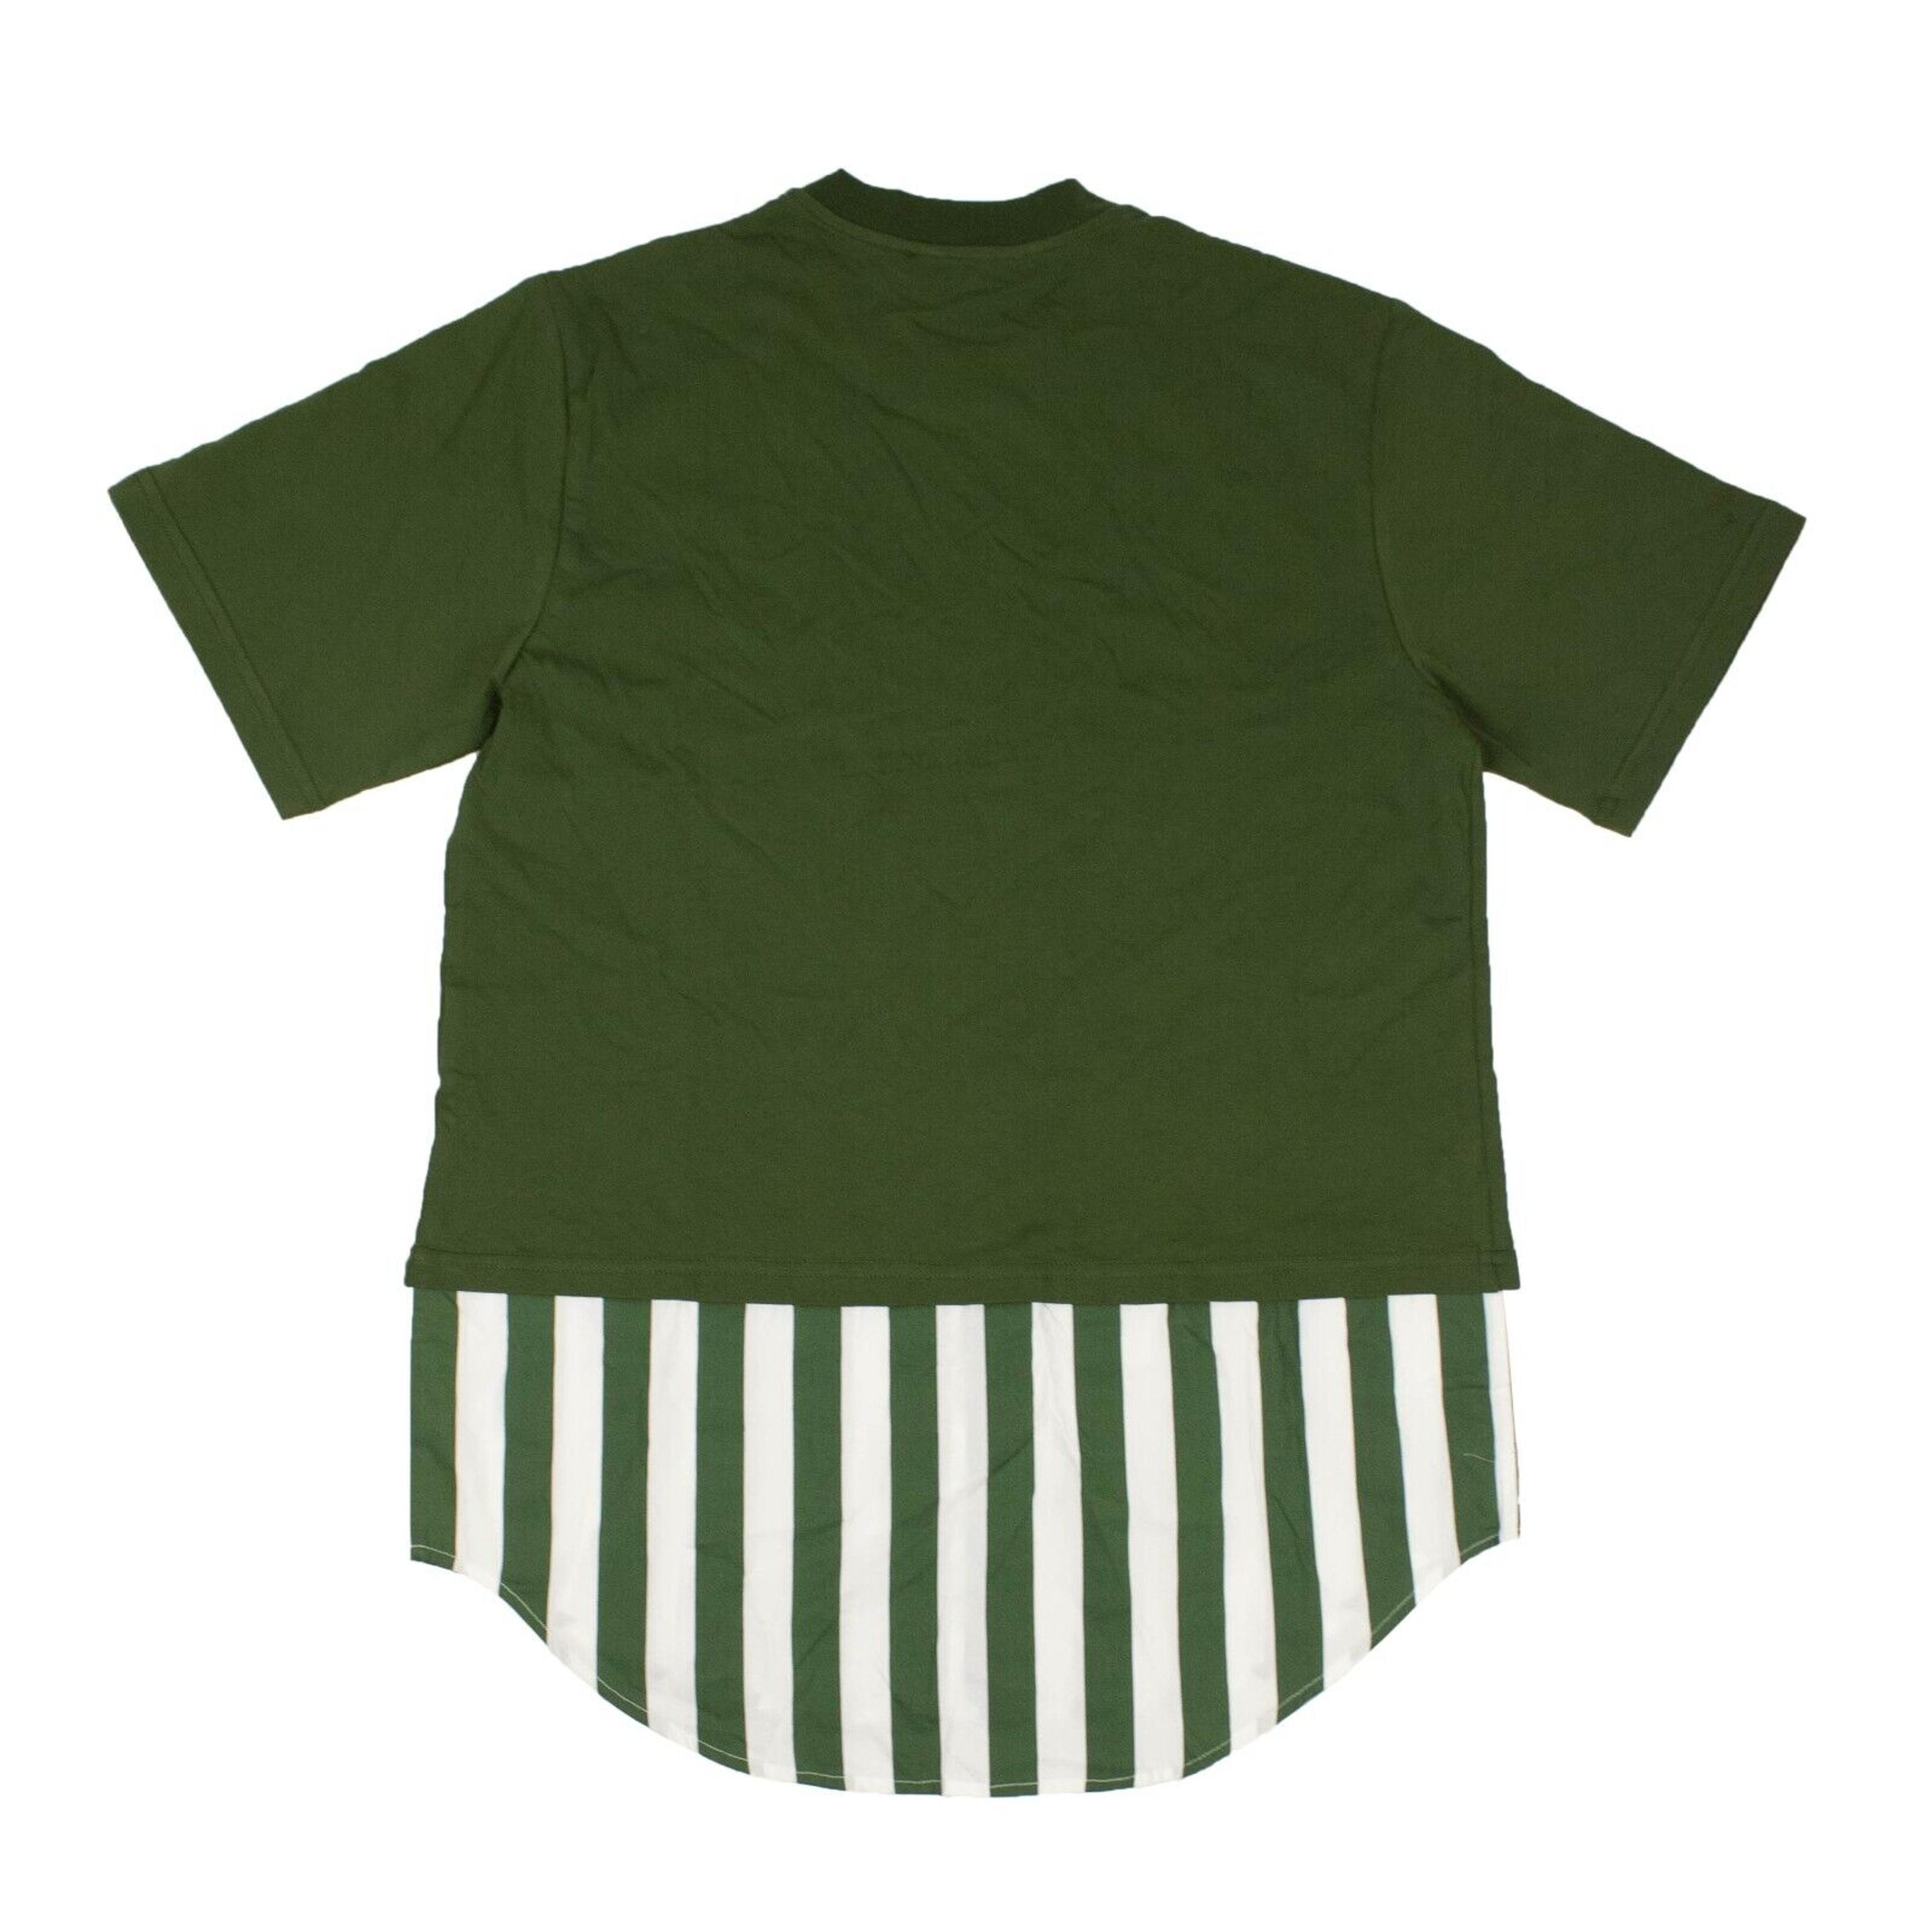 Alternate View 8 of Men'S T-Shirts - Green/White